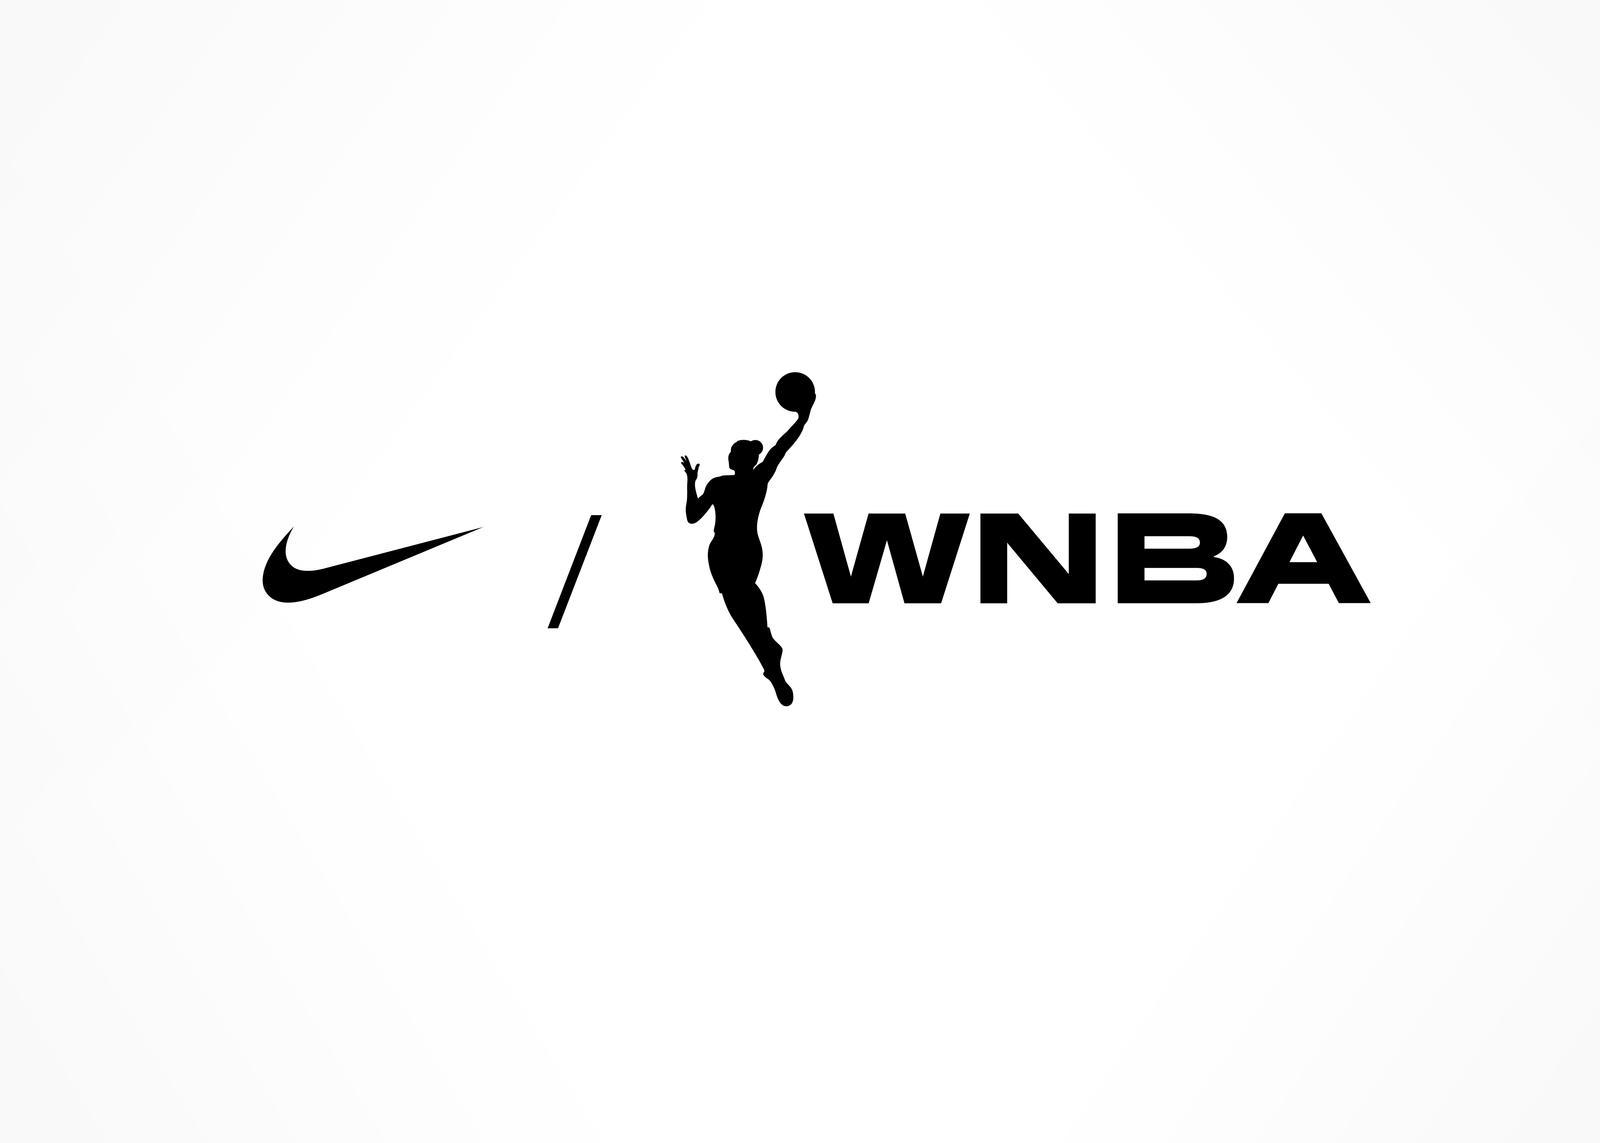 Wnnba Logo - Nike WNBA Partnership and Grassroots Women's Basketball - Nike News